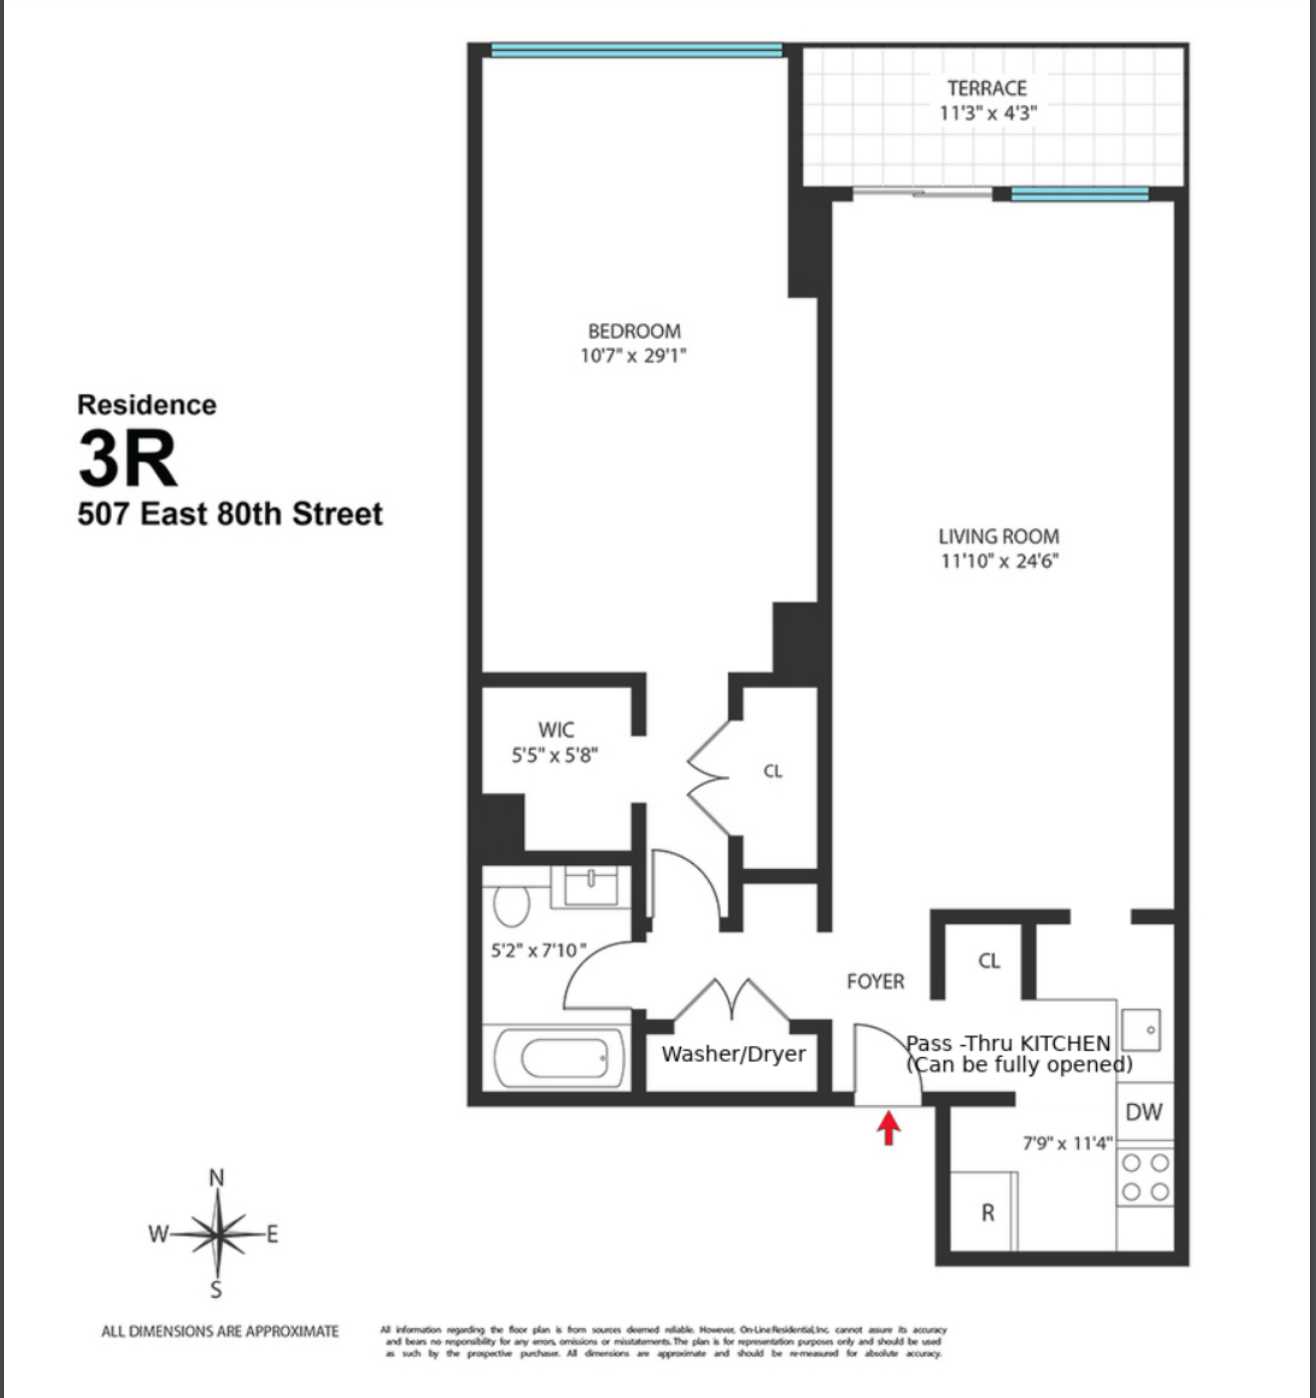 Floorplan for 507 East 80th Street, 3R